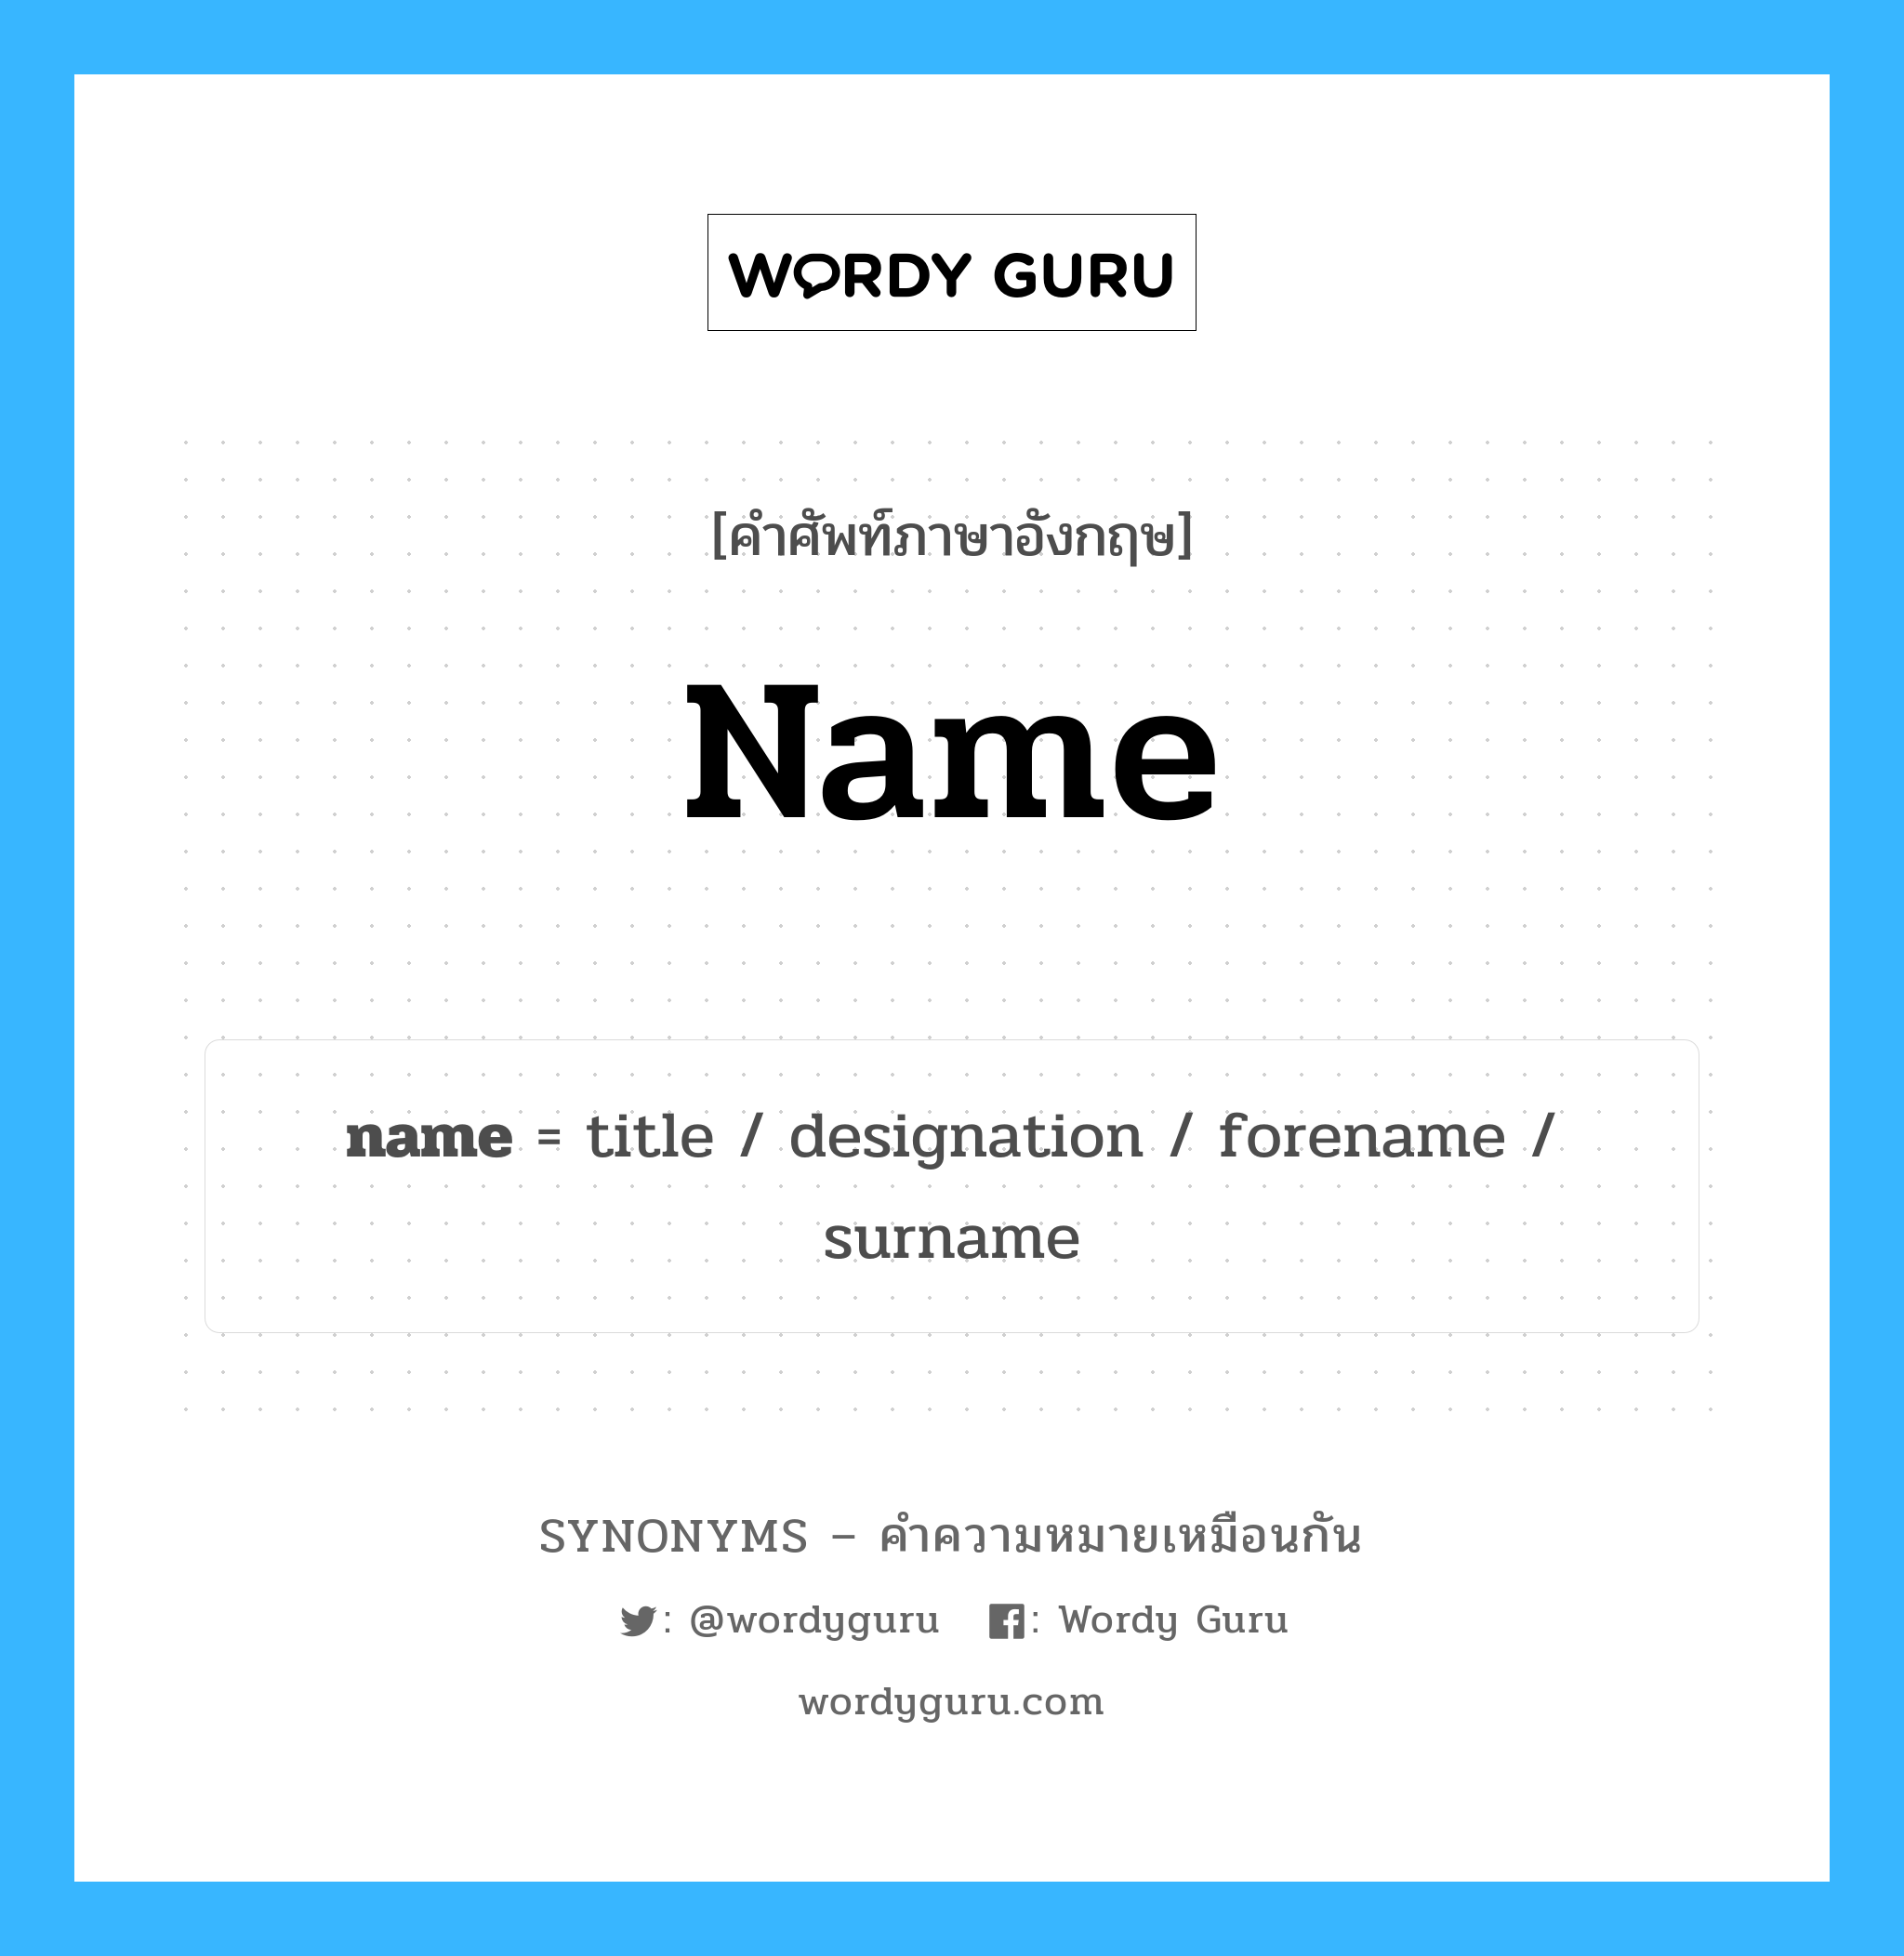 surname เป็นหนึ่งใน name และมีคำอื่น ๆ อีกดังนี้, คำศัพท์ภาษาอังกฤษ surname ความหมายคล้ายกันกับ name แปลว่า นามสกุล หมวด name